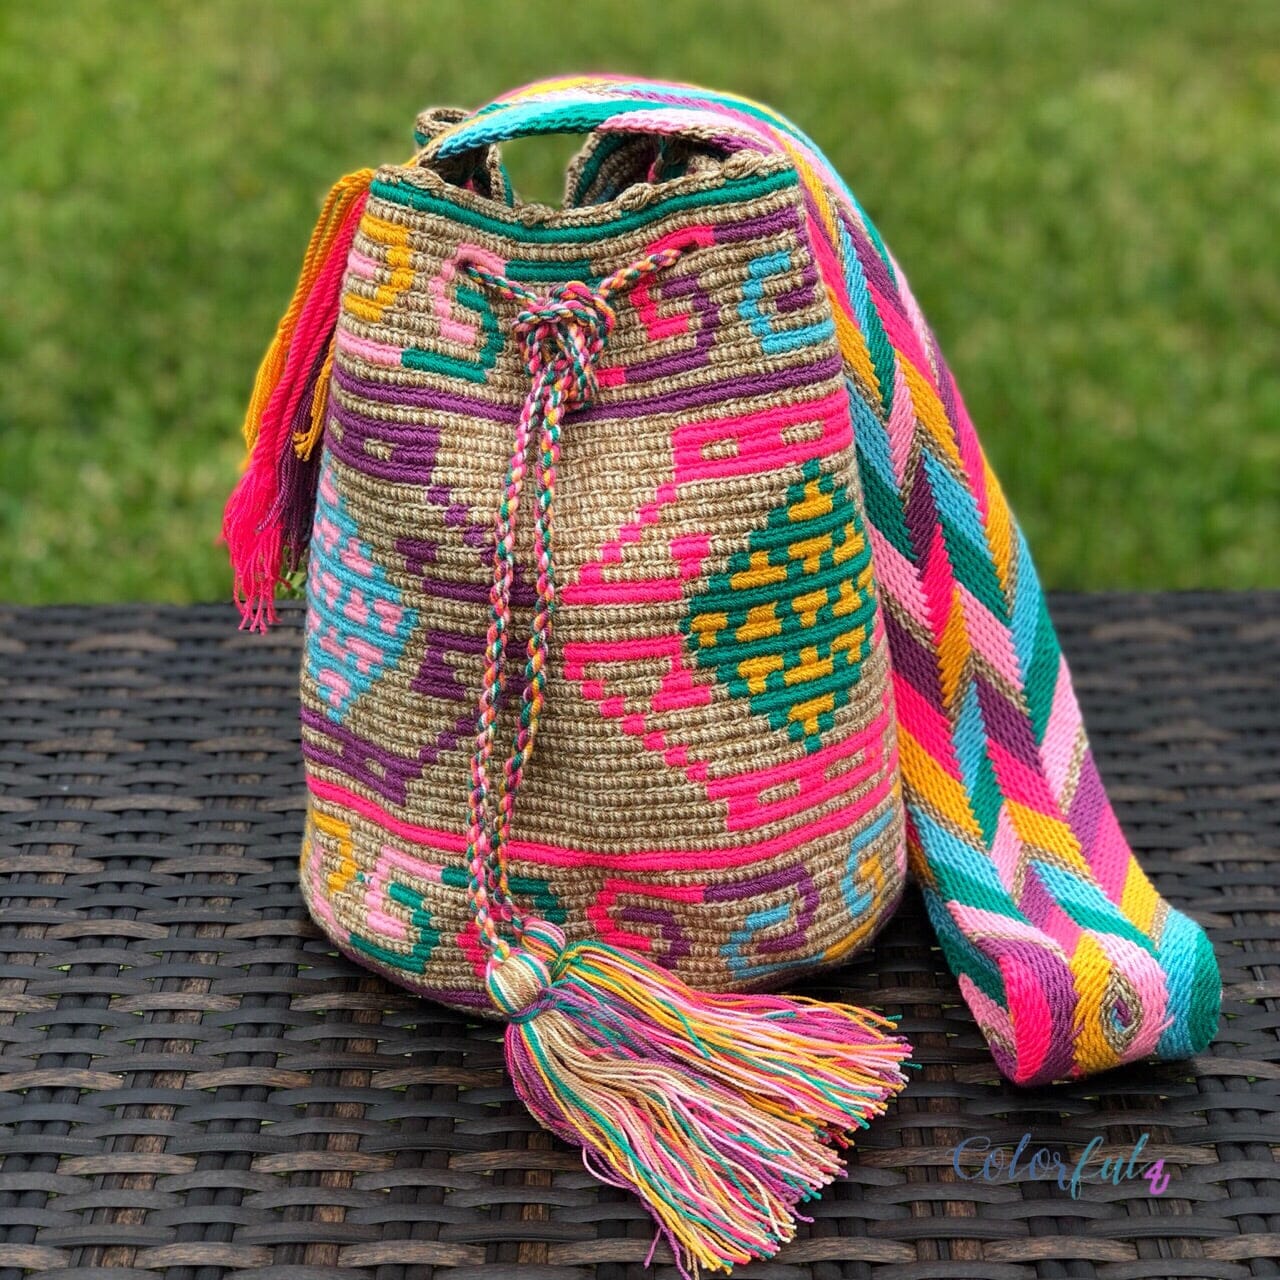 Fortioo Crossbody Bag for Women, Gmyle Straw Weave Shoulder Handbag Bucket Bag Mini Fashion Spring Summer Travel Beach, Gift for Mother Wife